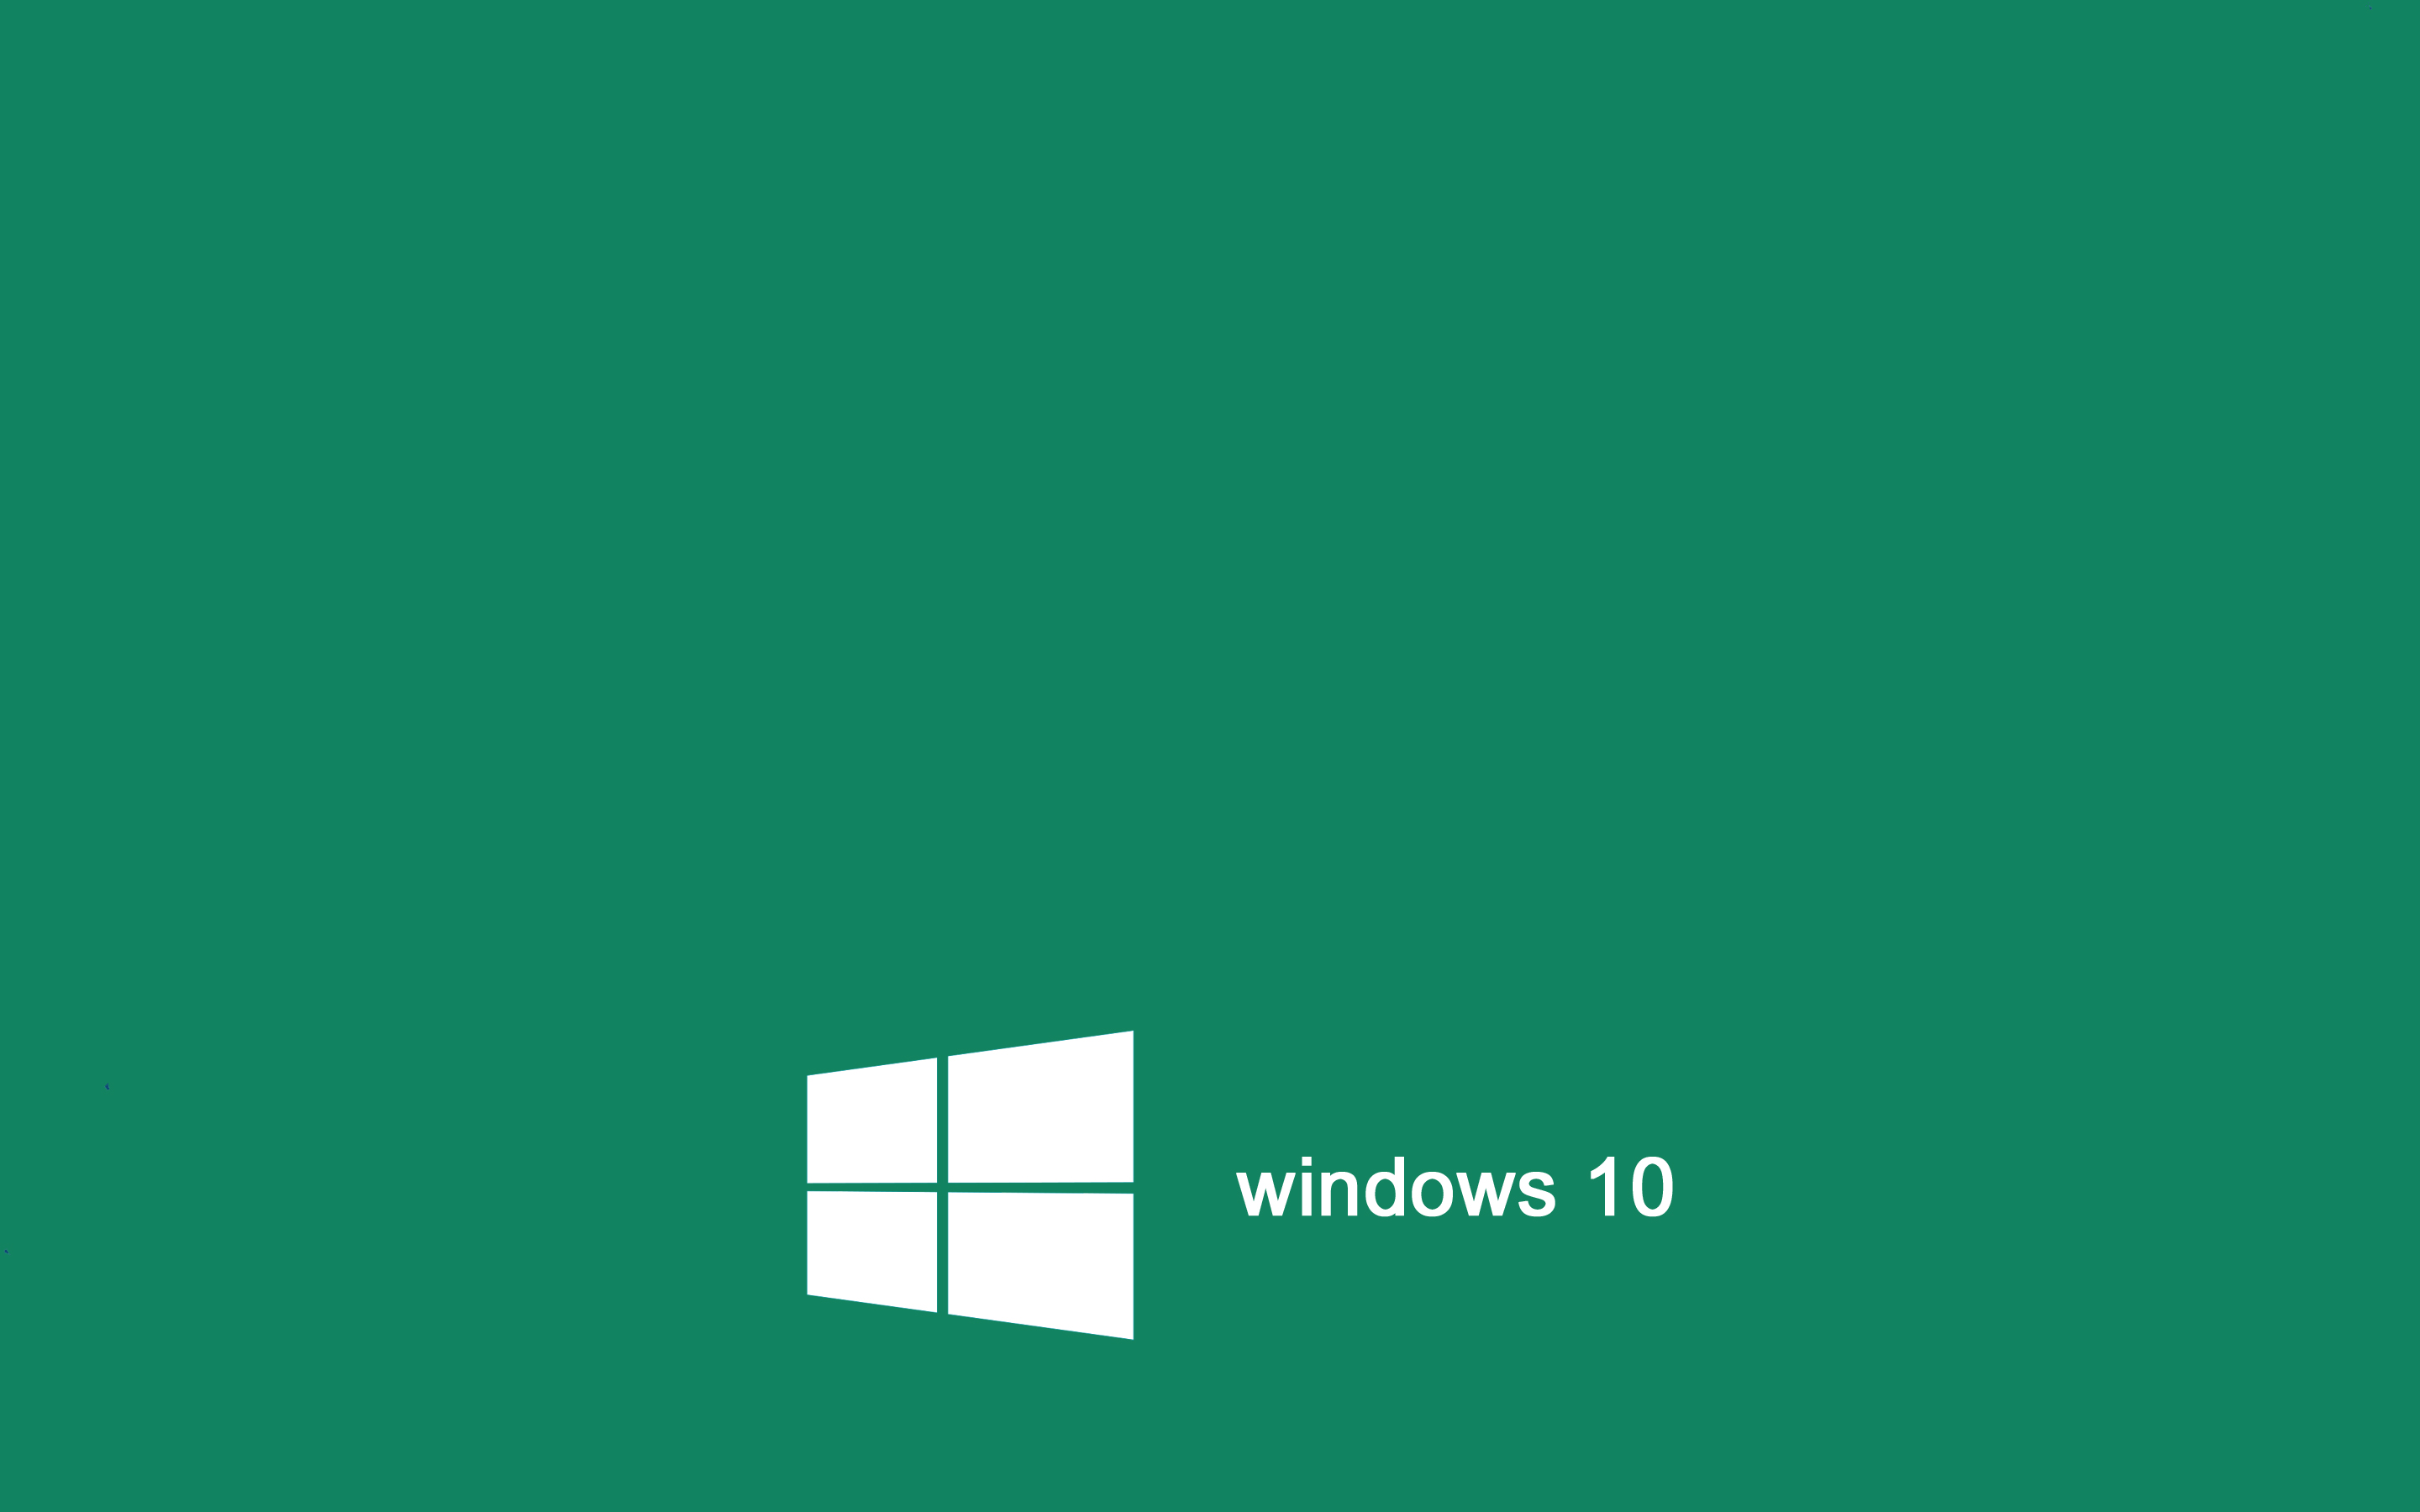 Windows 10 Green Wallpaper - WallpaperSafari